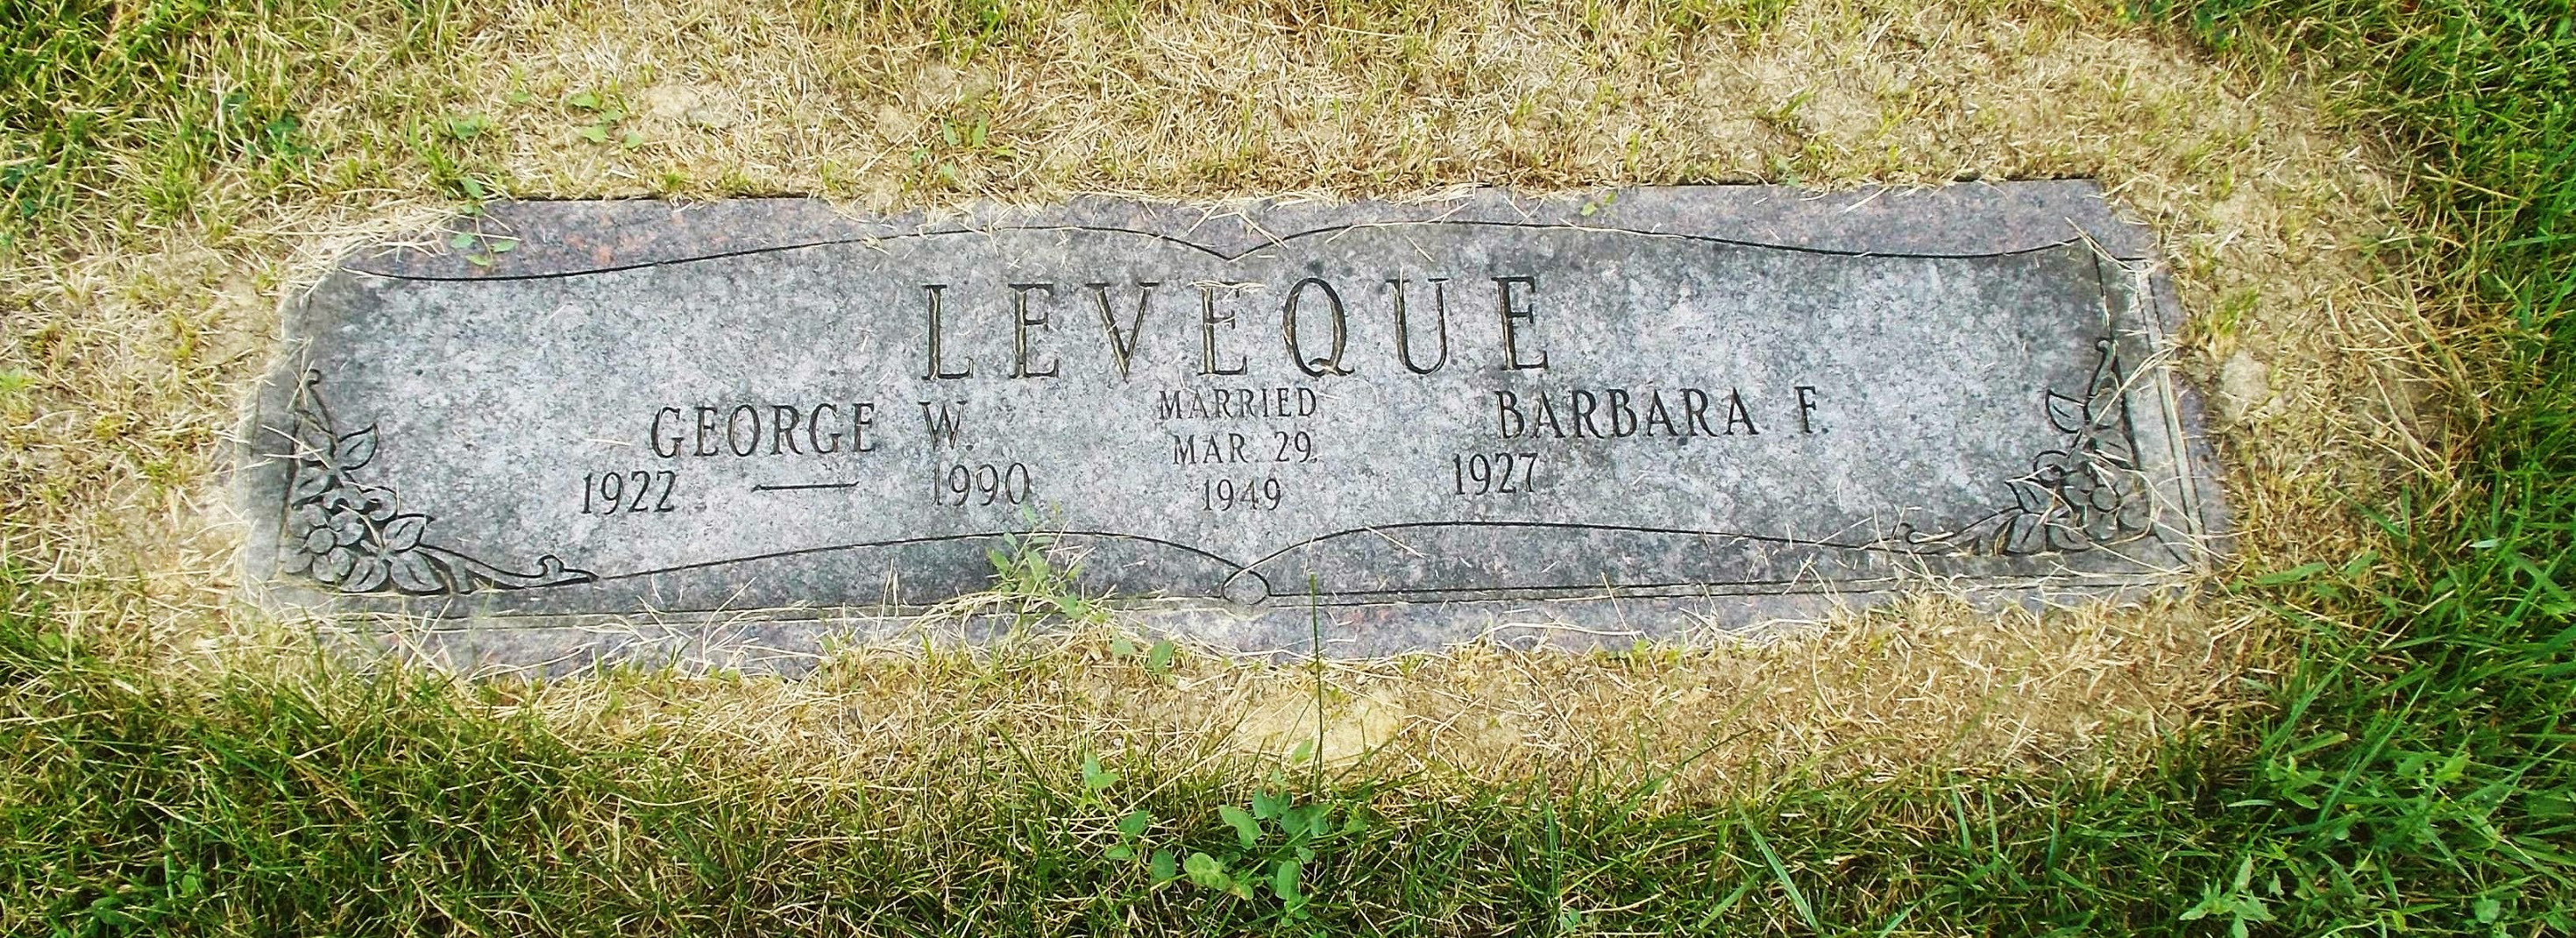 George W Leveque